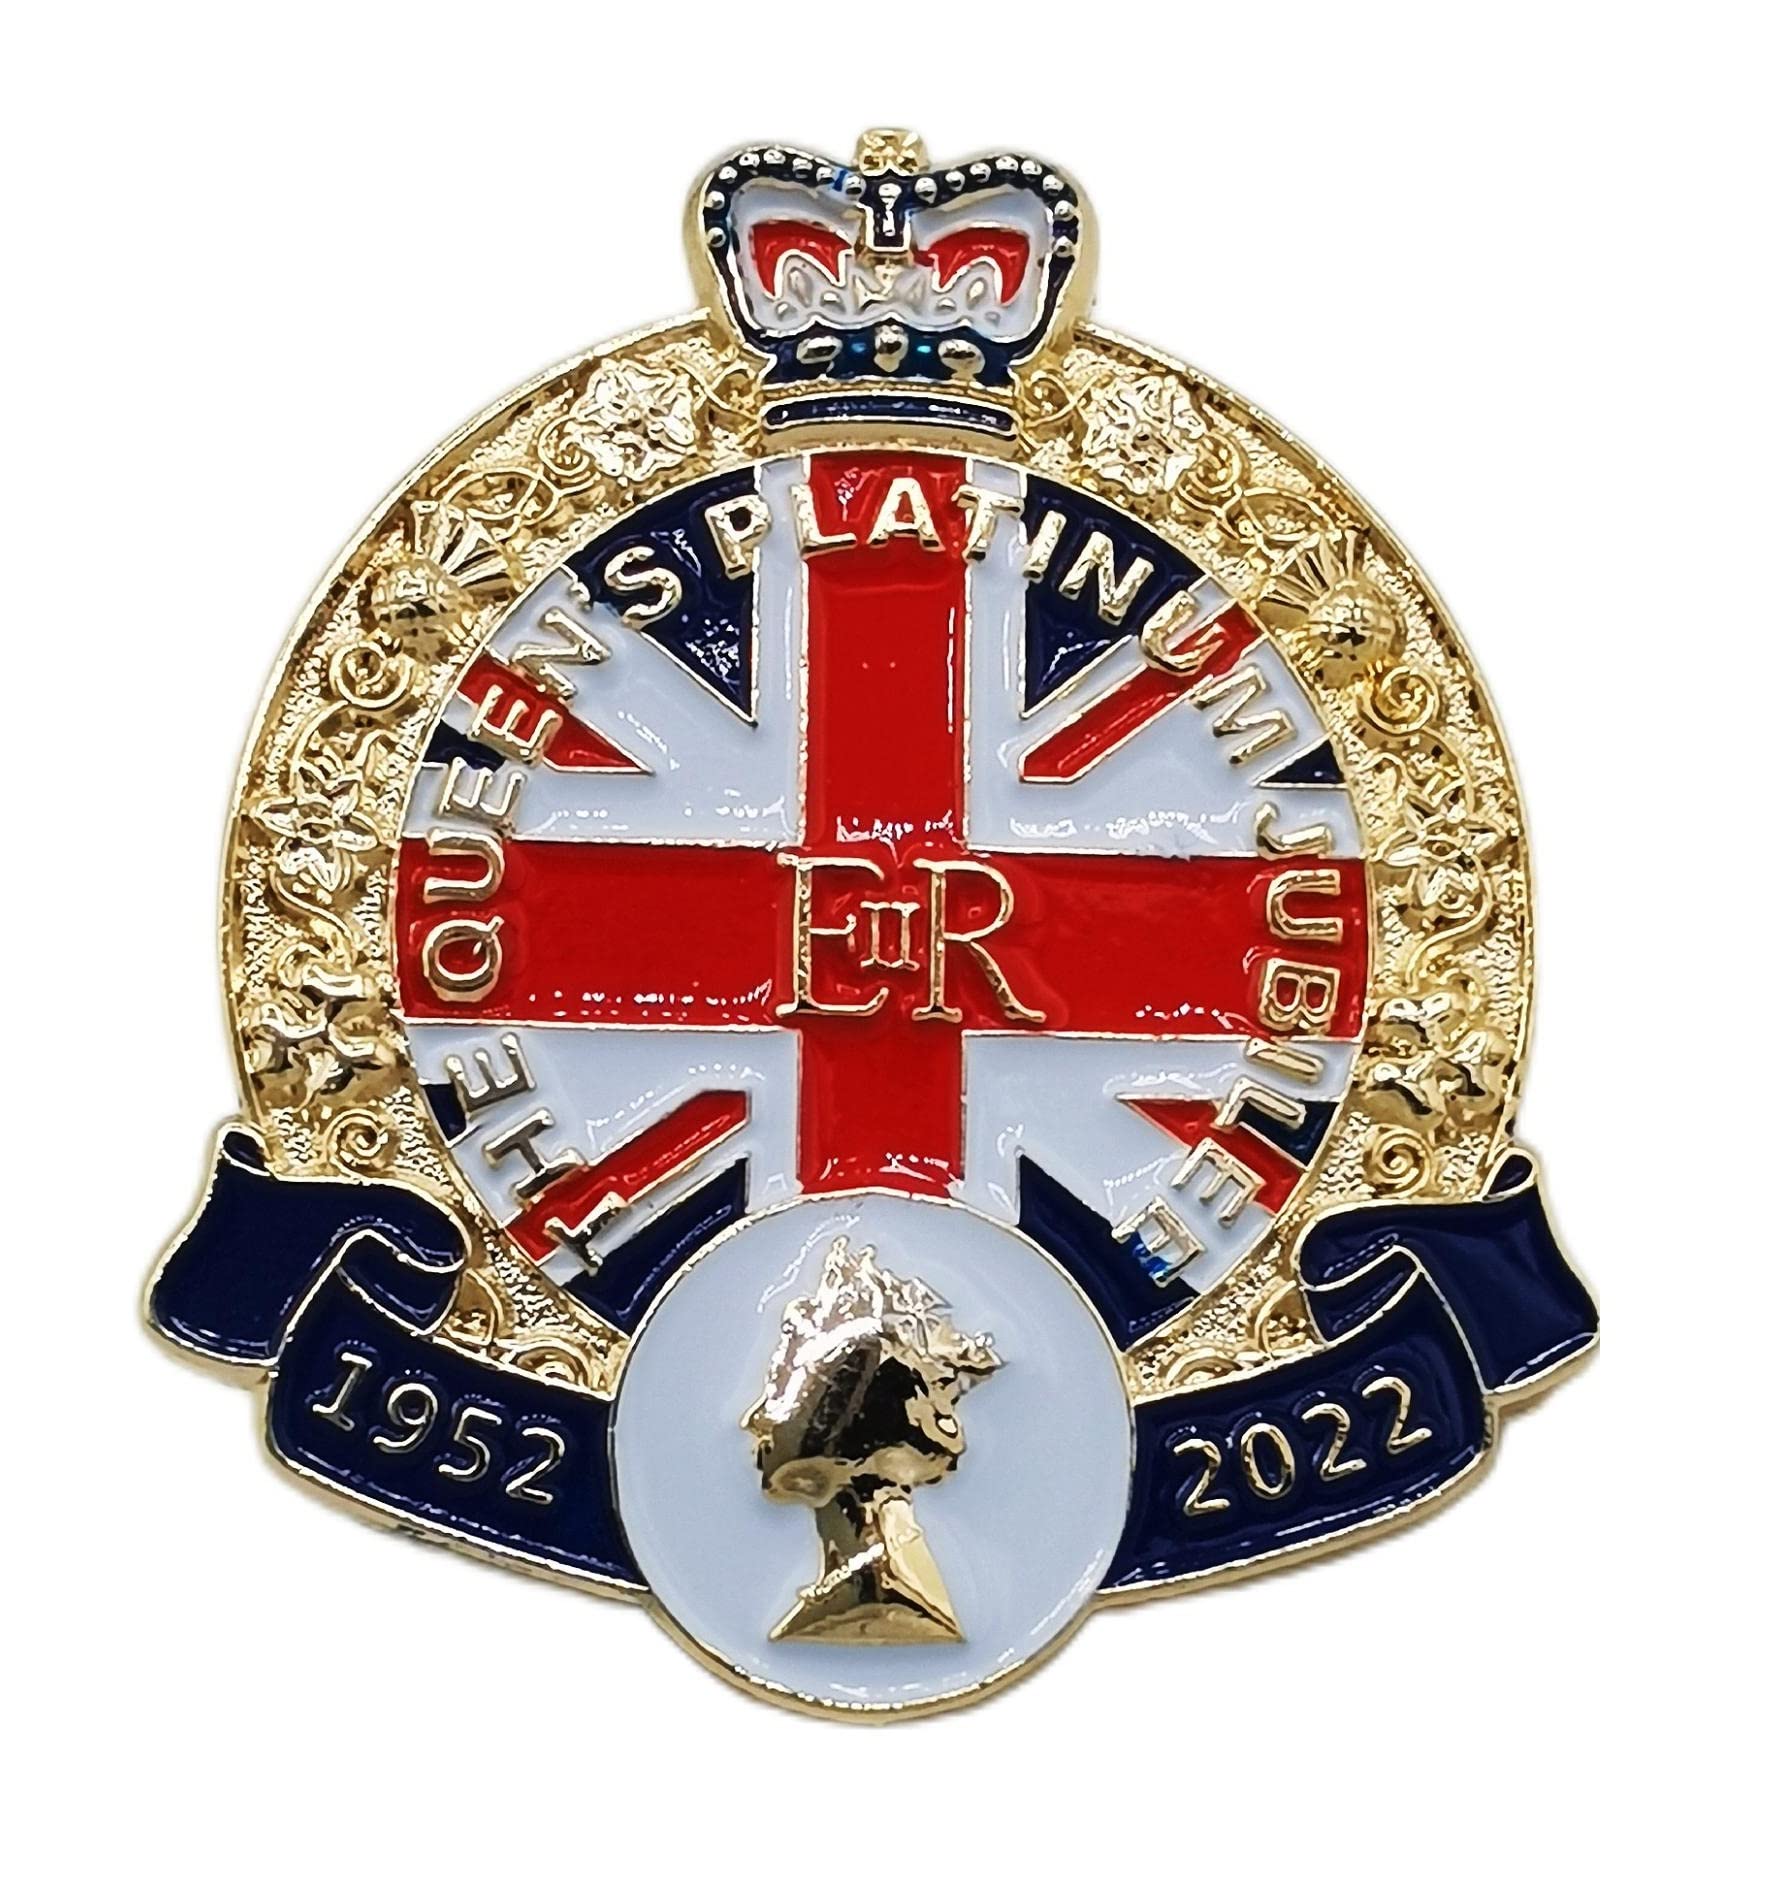 1952-2022 Platinum Jubilee ER Queen Elizabeth II Enamel Pin Badge/Brooch, 36X31MM. Colour Gold